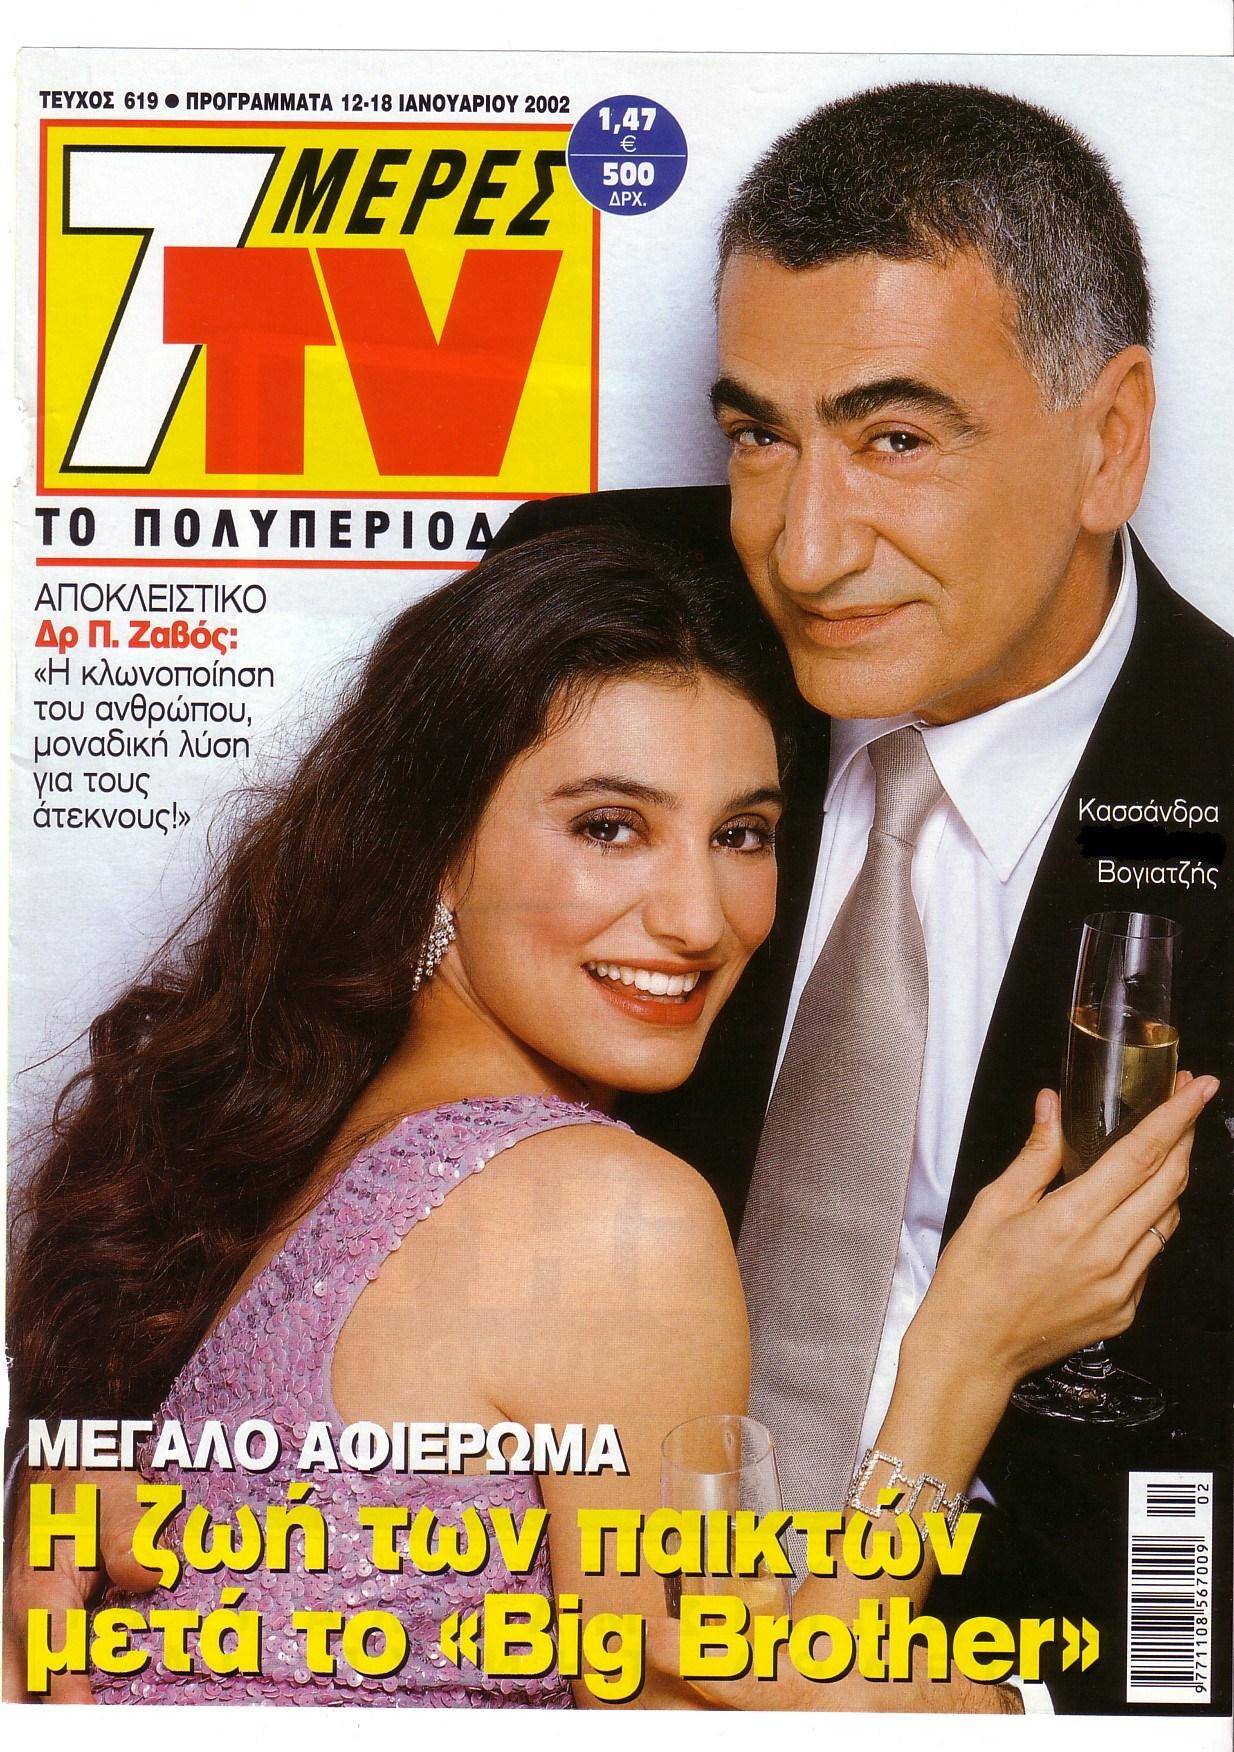 TV Guide Greece Kassandra Voyagis and Yorgo Voyagis